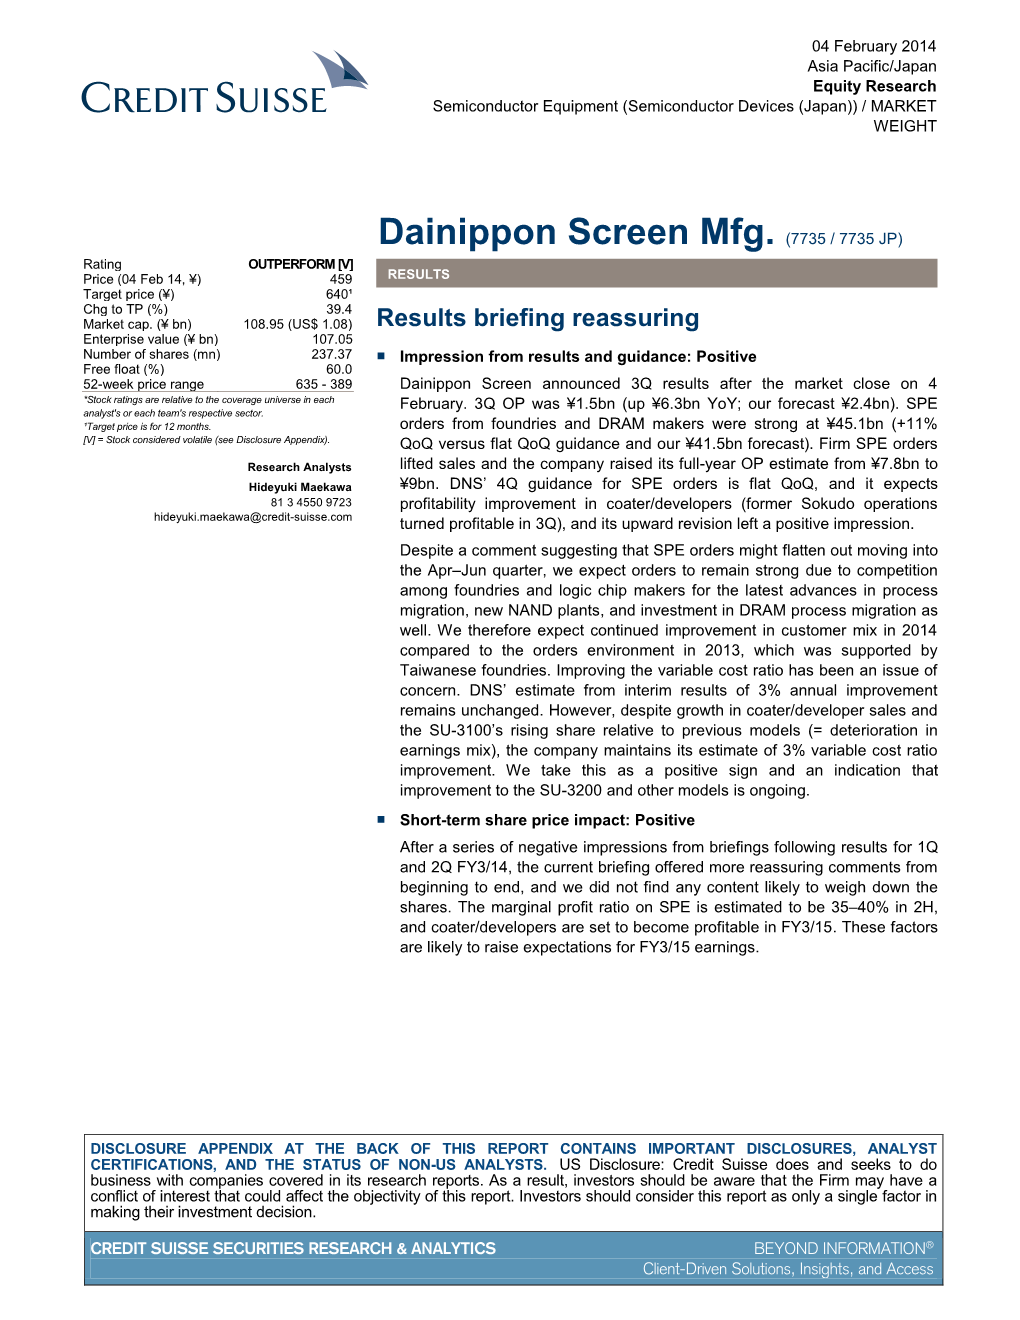 Dainippon Screen Mfg. (7735)